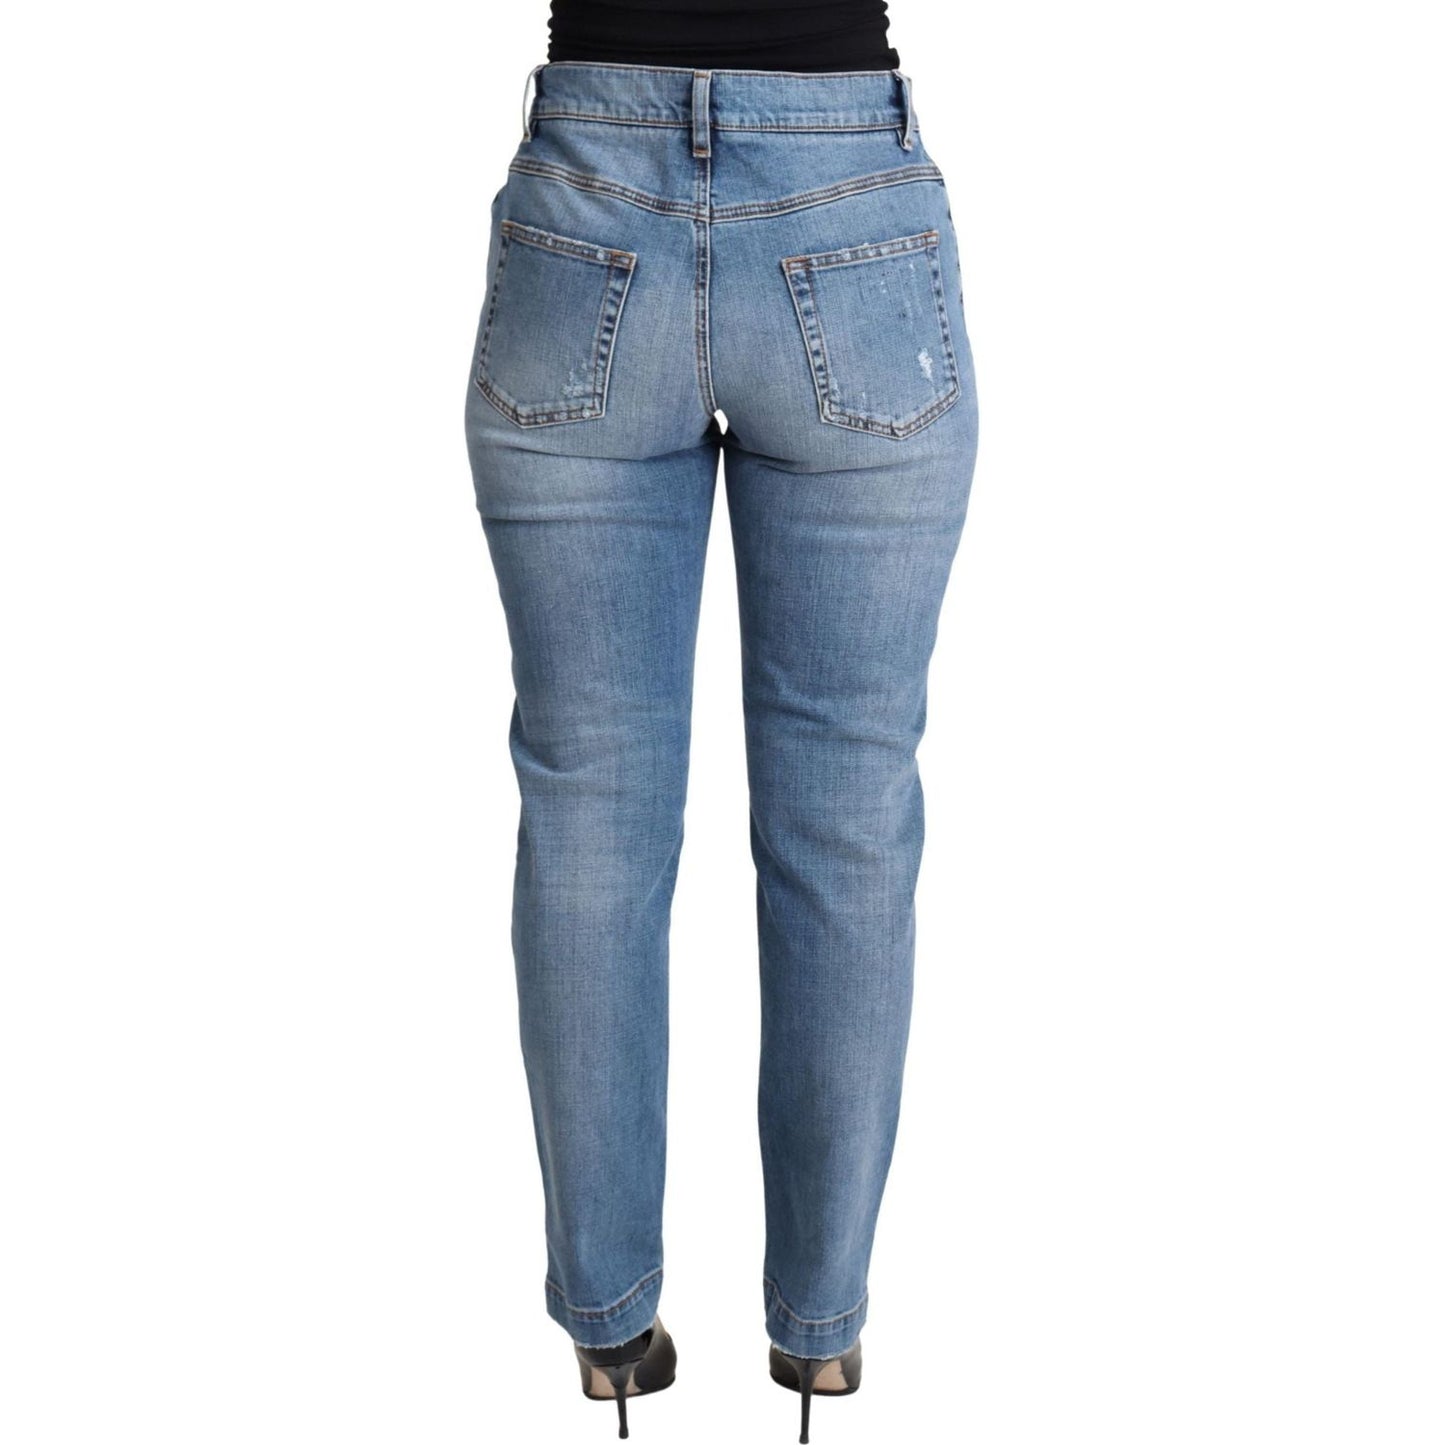 Dolce & Gabbana Chic High-Waisted Tattered Skinny Jeans blue-tattered-skinny-denim-cotton-blend-jeans